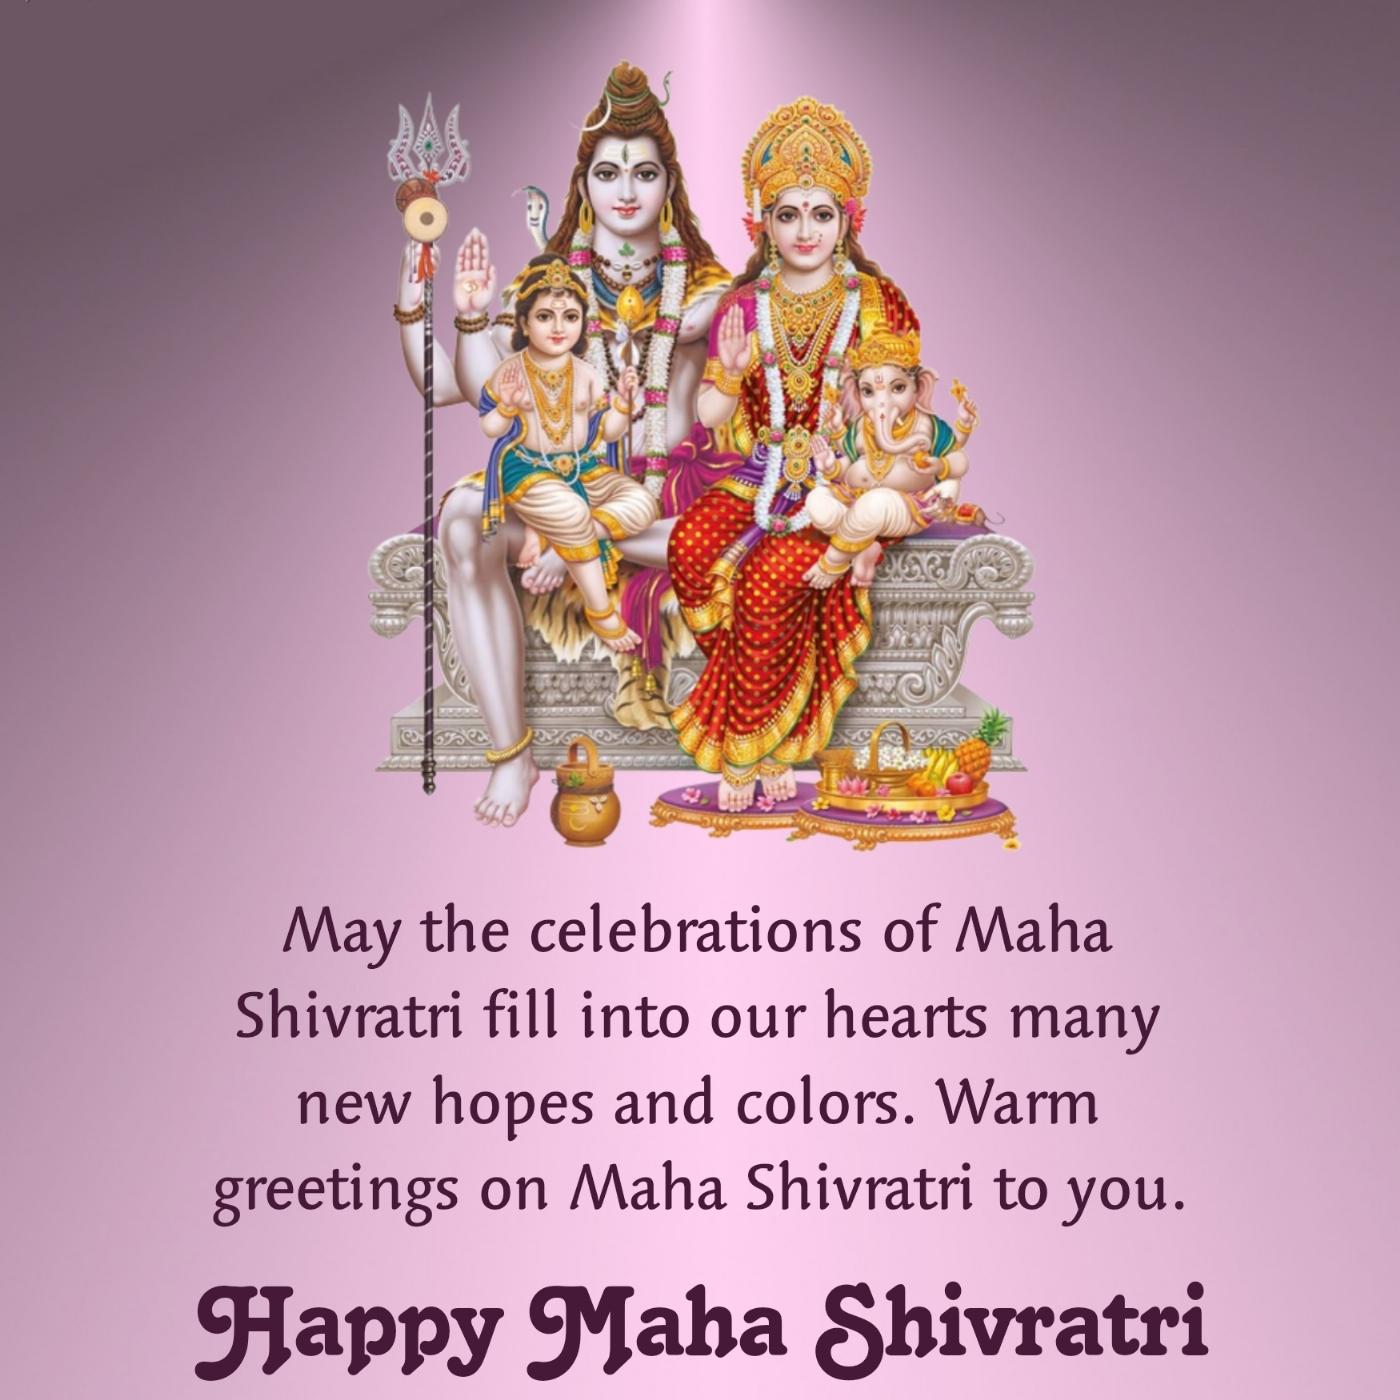 May the celebrations of Maha Shivratri fill into our hearts